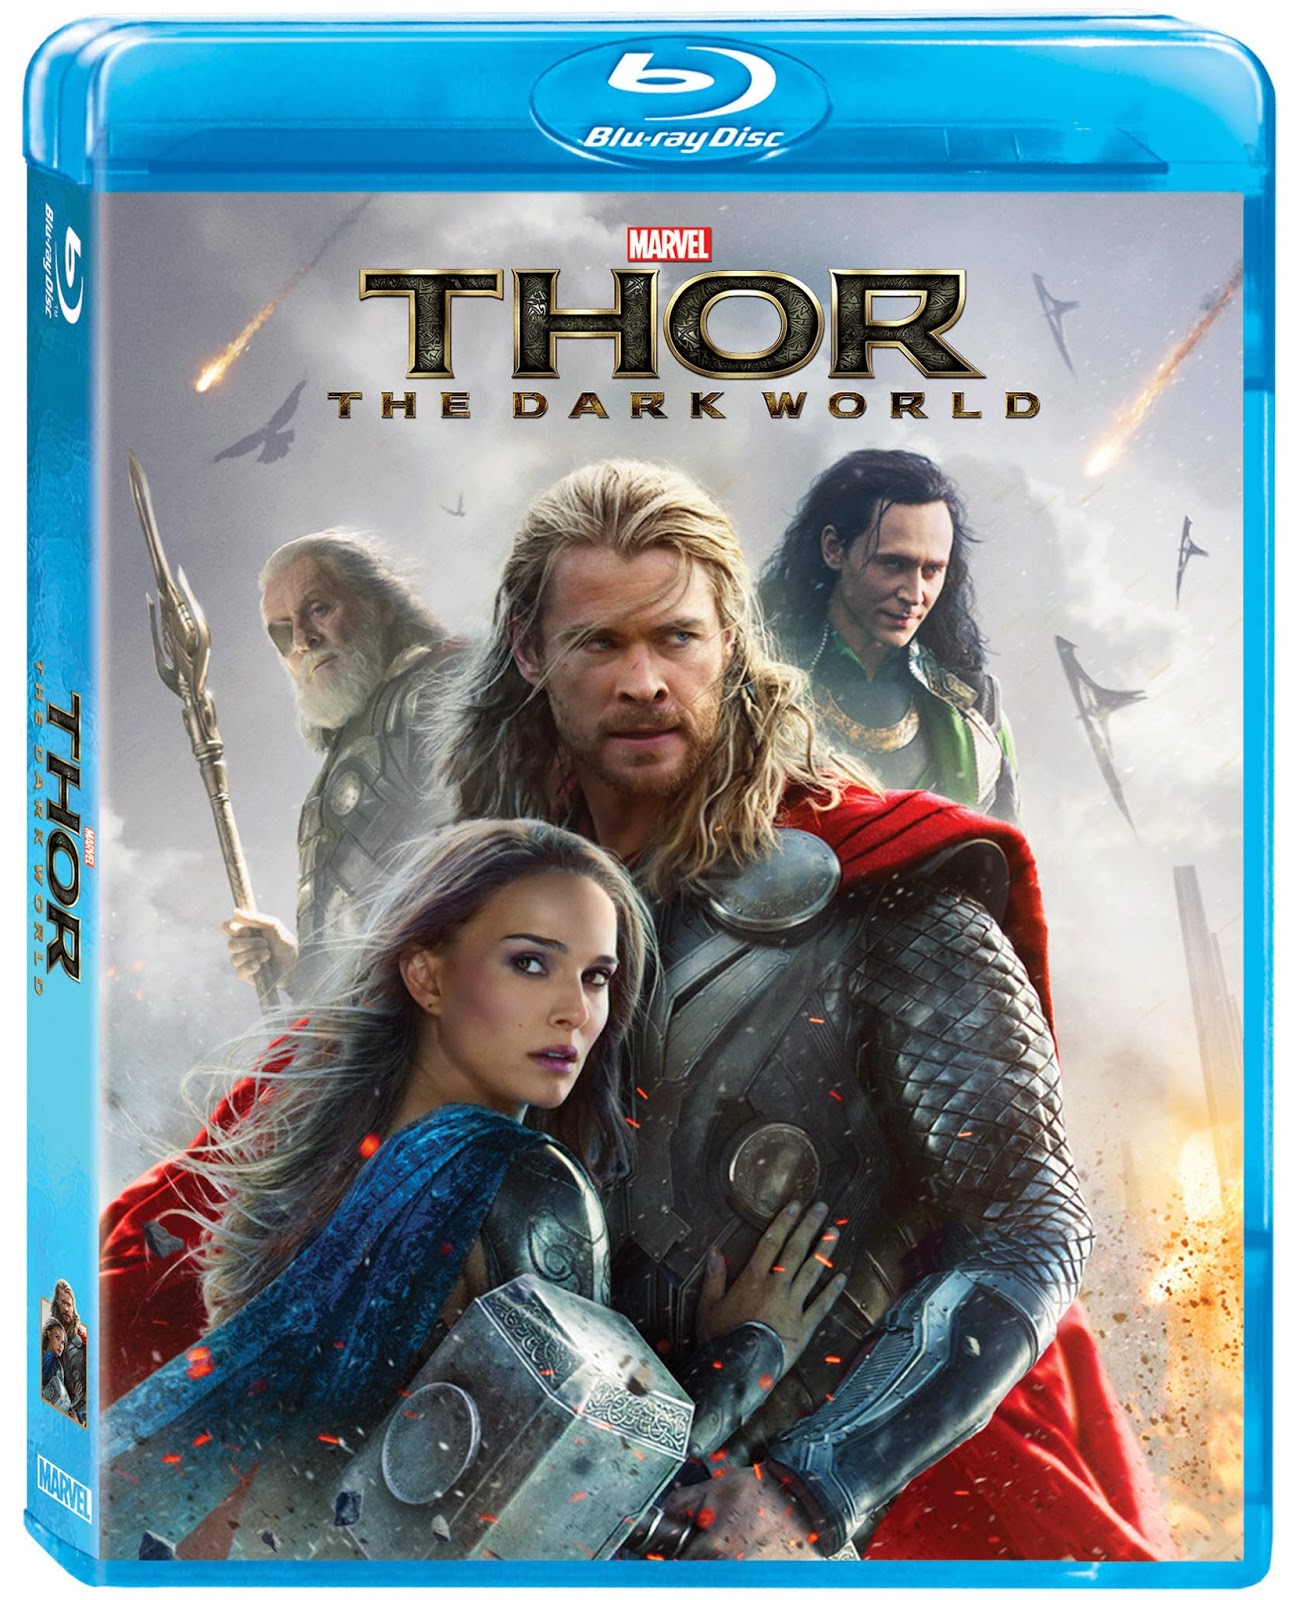 Download Thor: The Dark World BluRay 720p + Subtitle Indonesia